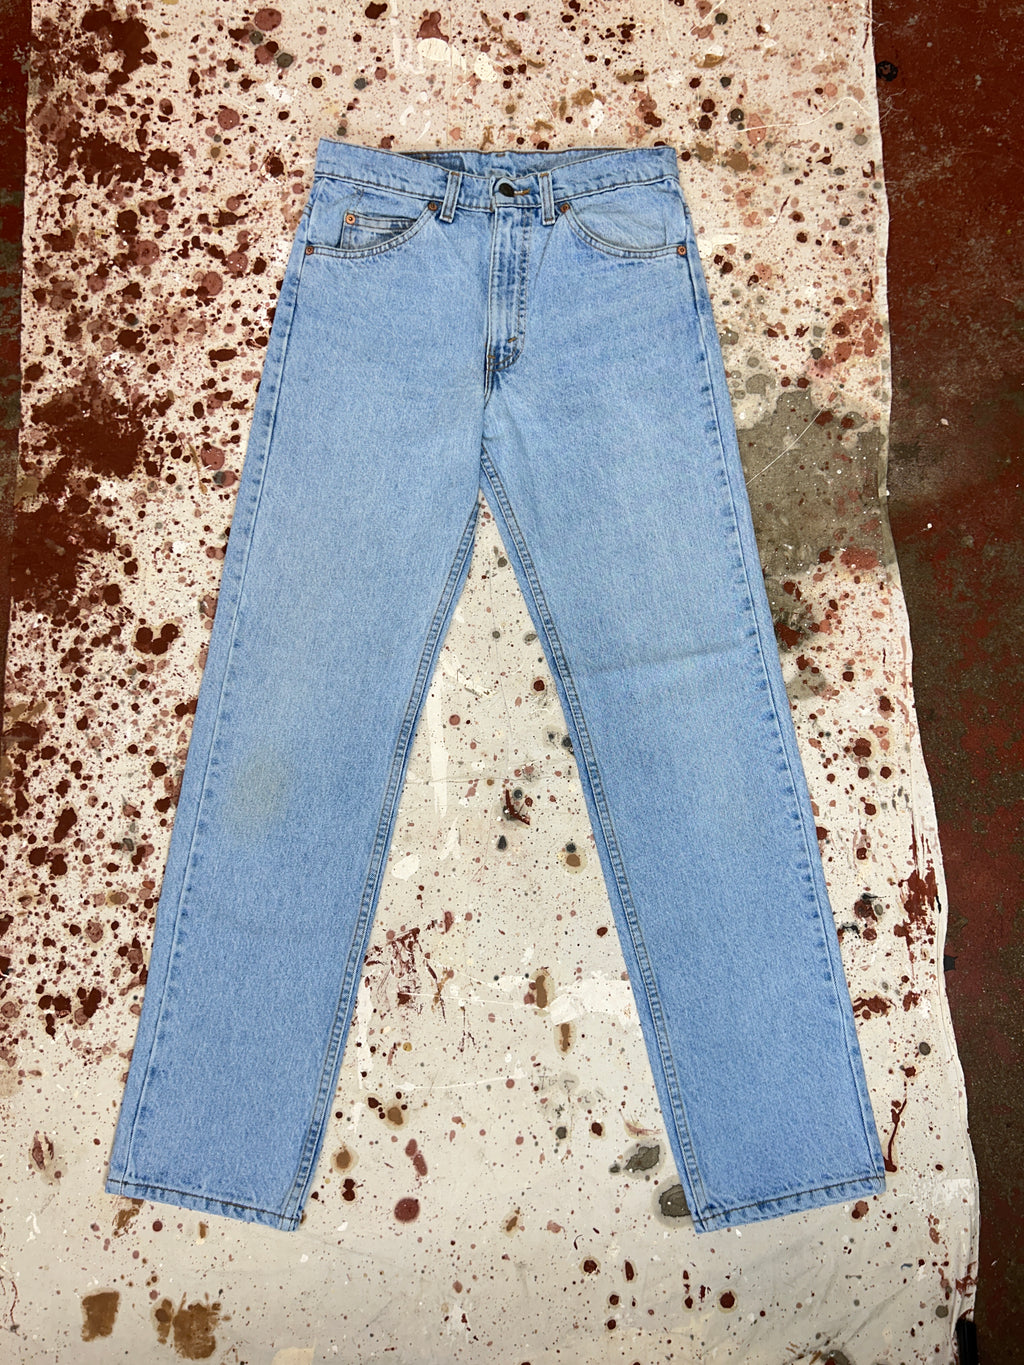 Vintage USA Levi's 505 Orange Tab Light Wash Denim Jeans (JYJ0424-183)